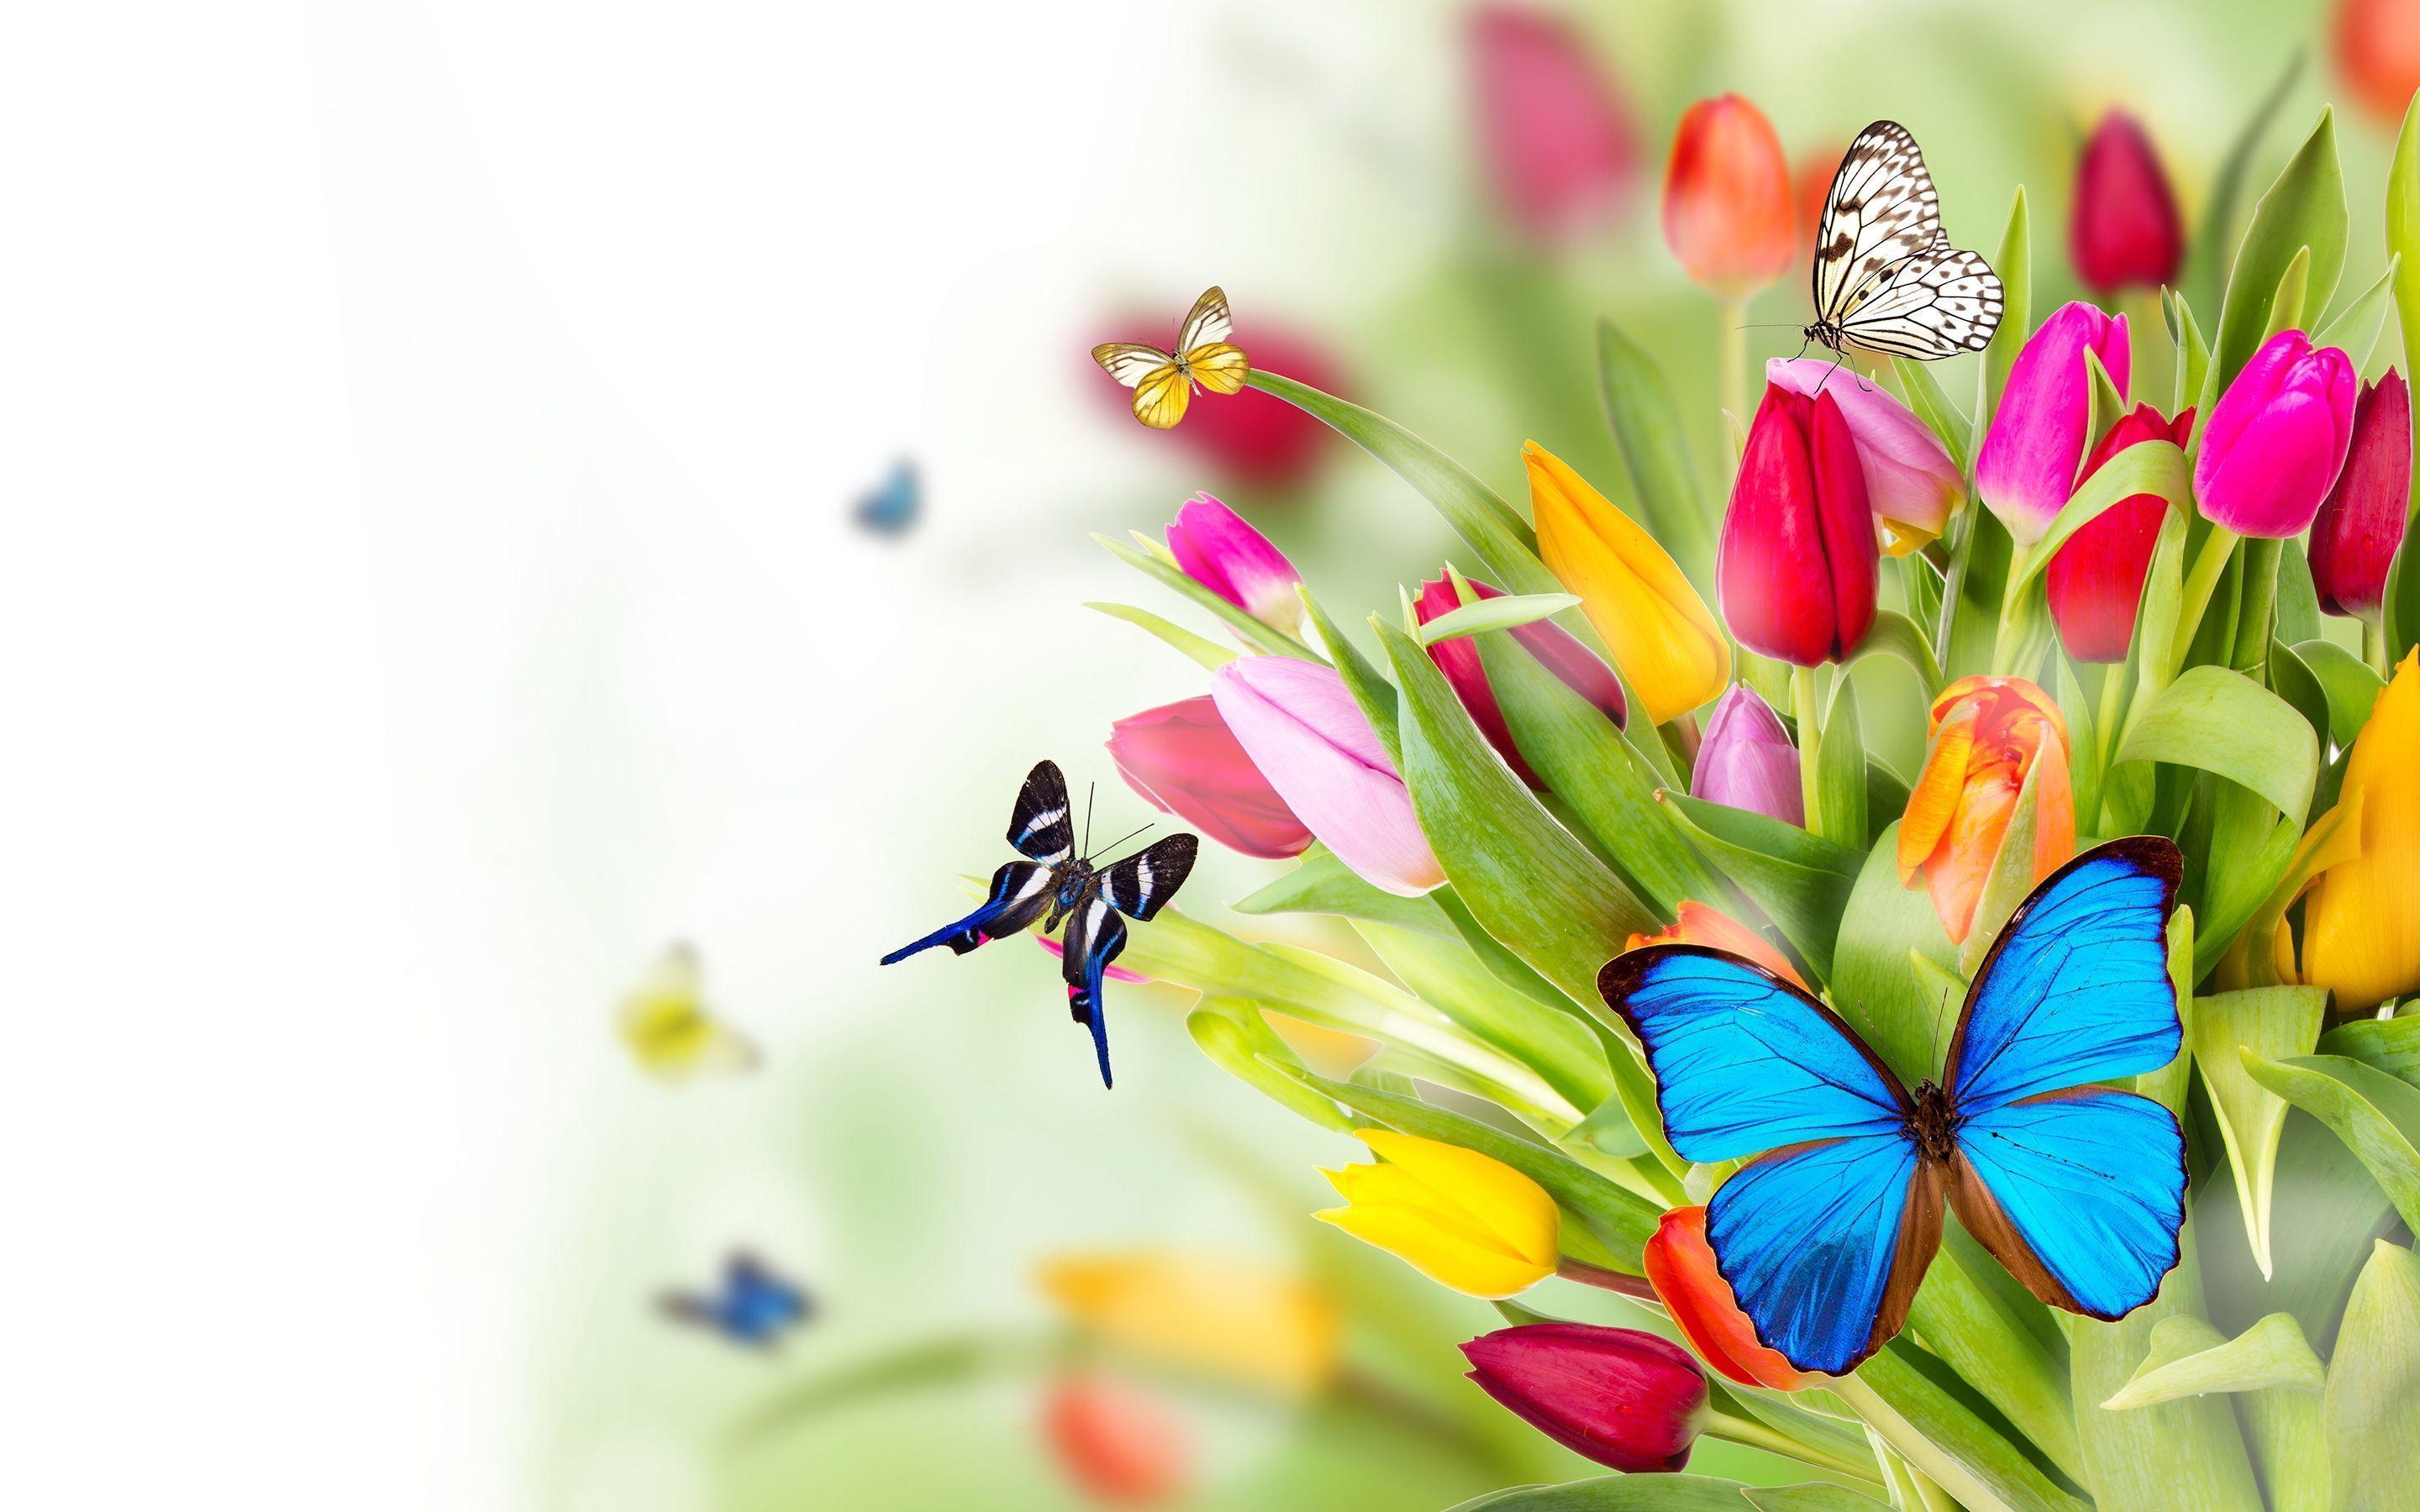 Flowers Butterflies Wallpaper Picture Photo Image. Bird